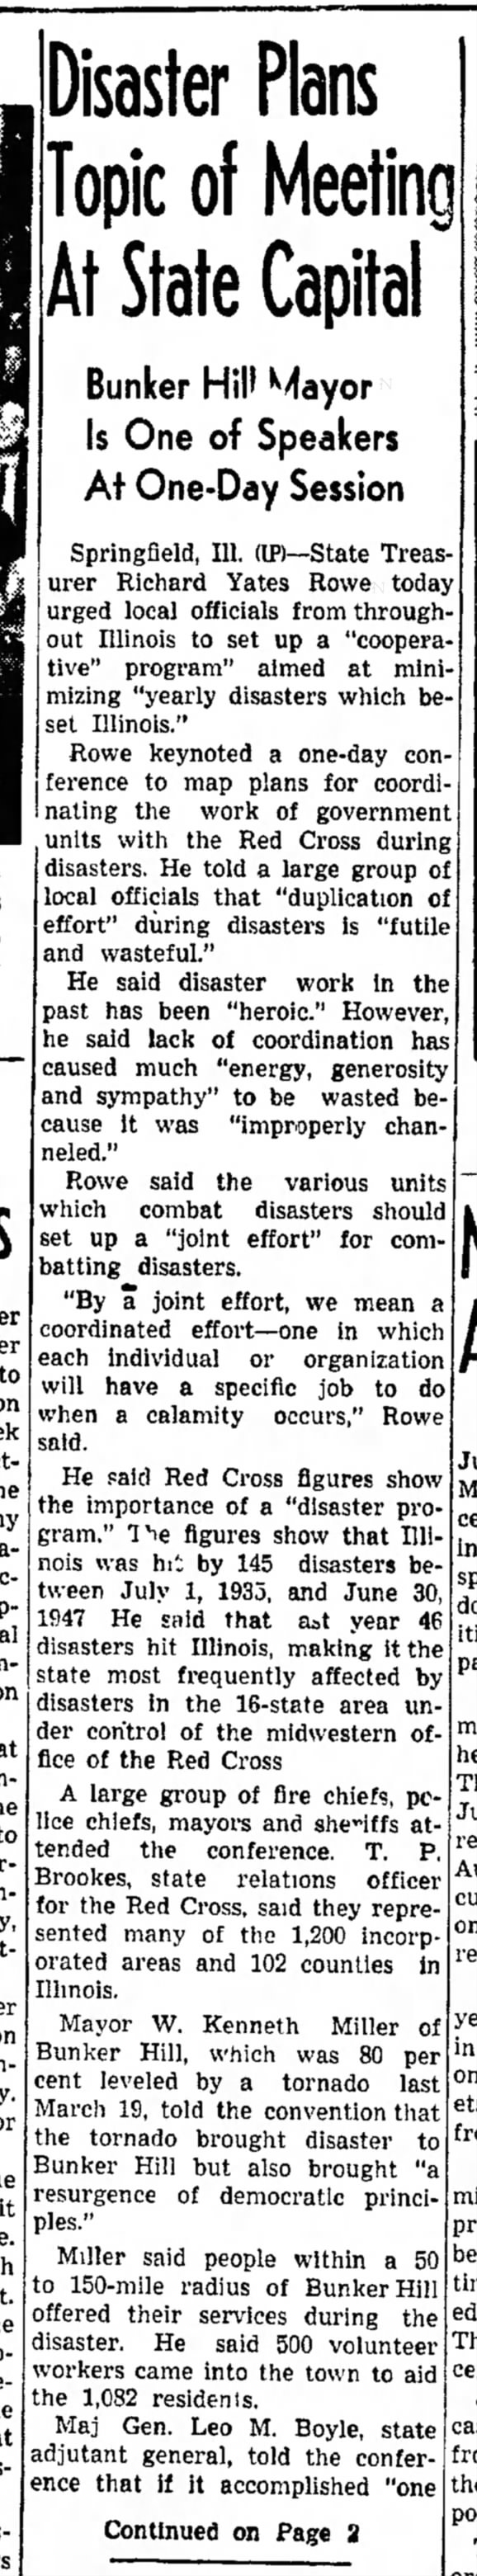 1948 Illinois State Disaster Planning Meeting. - Tom Malmay